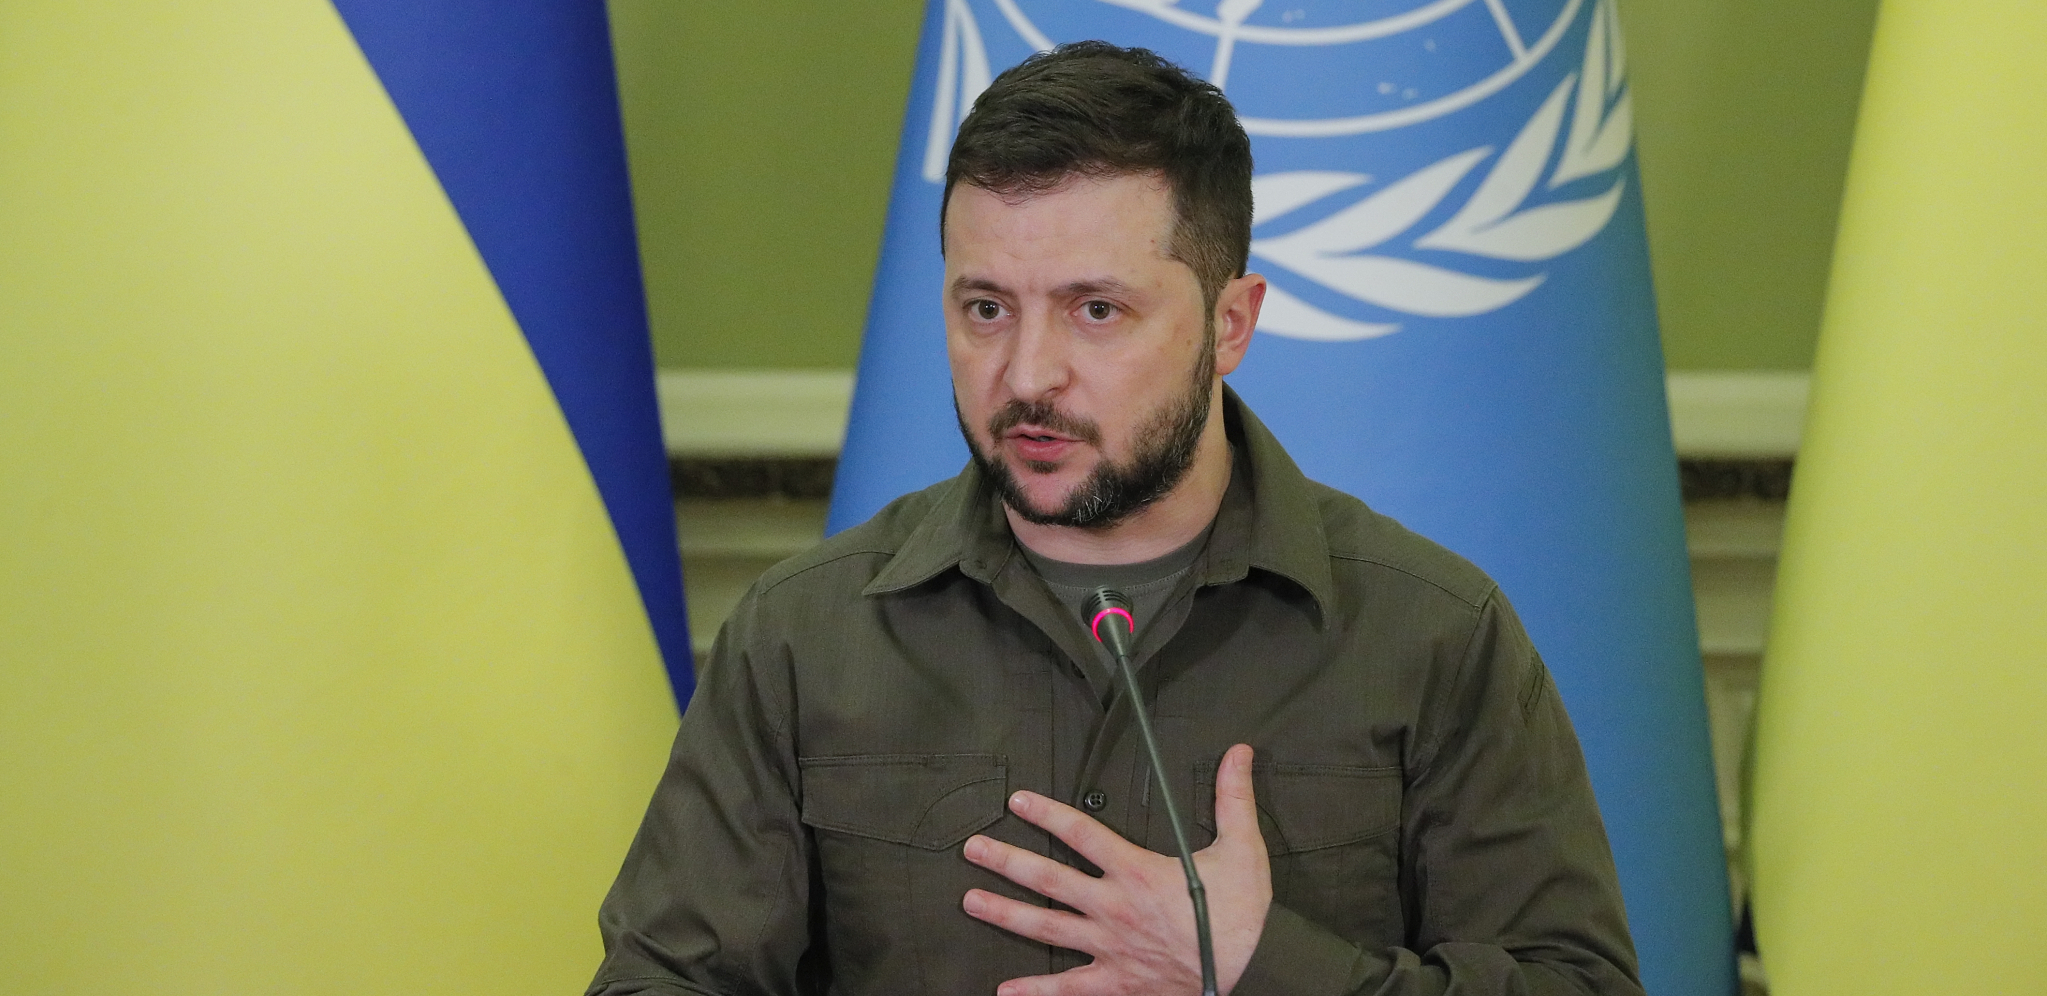 ZELENSKI ODUŠEVLJEN: "Džonson potvrdio novi paket vojne pomoći Ukrajini"